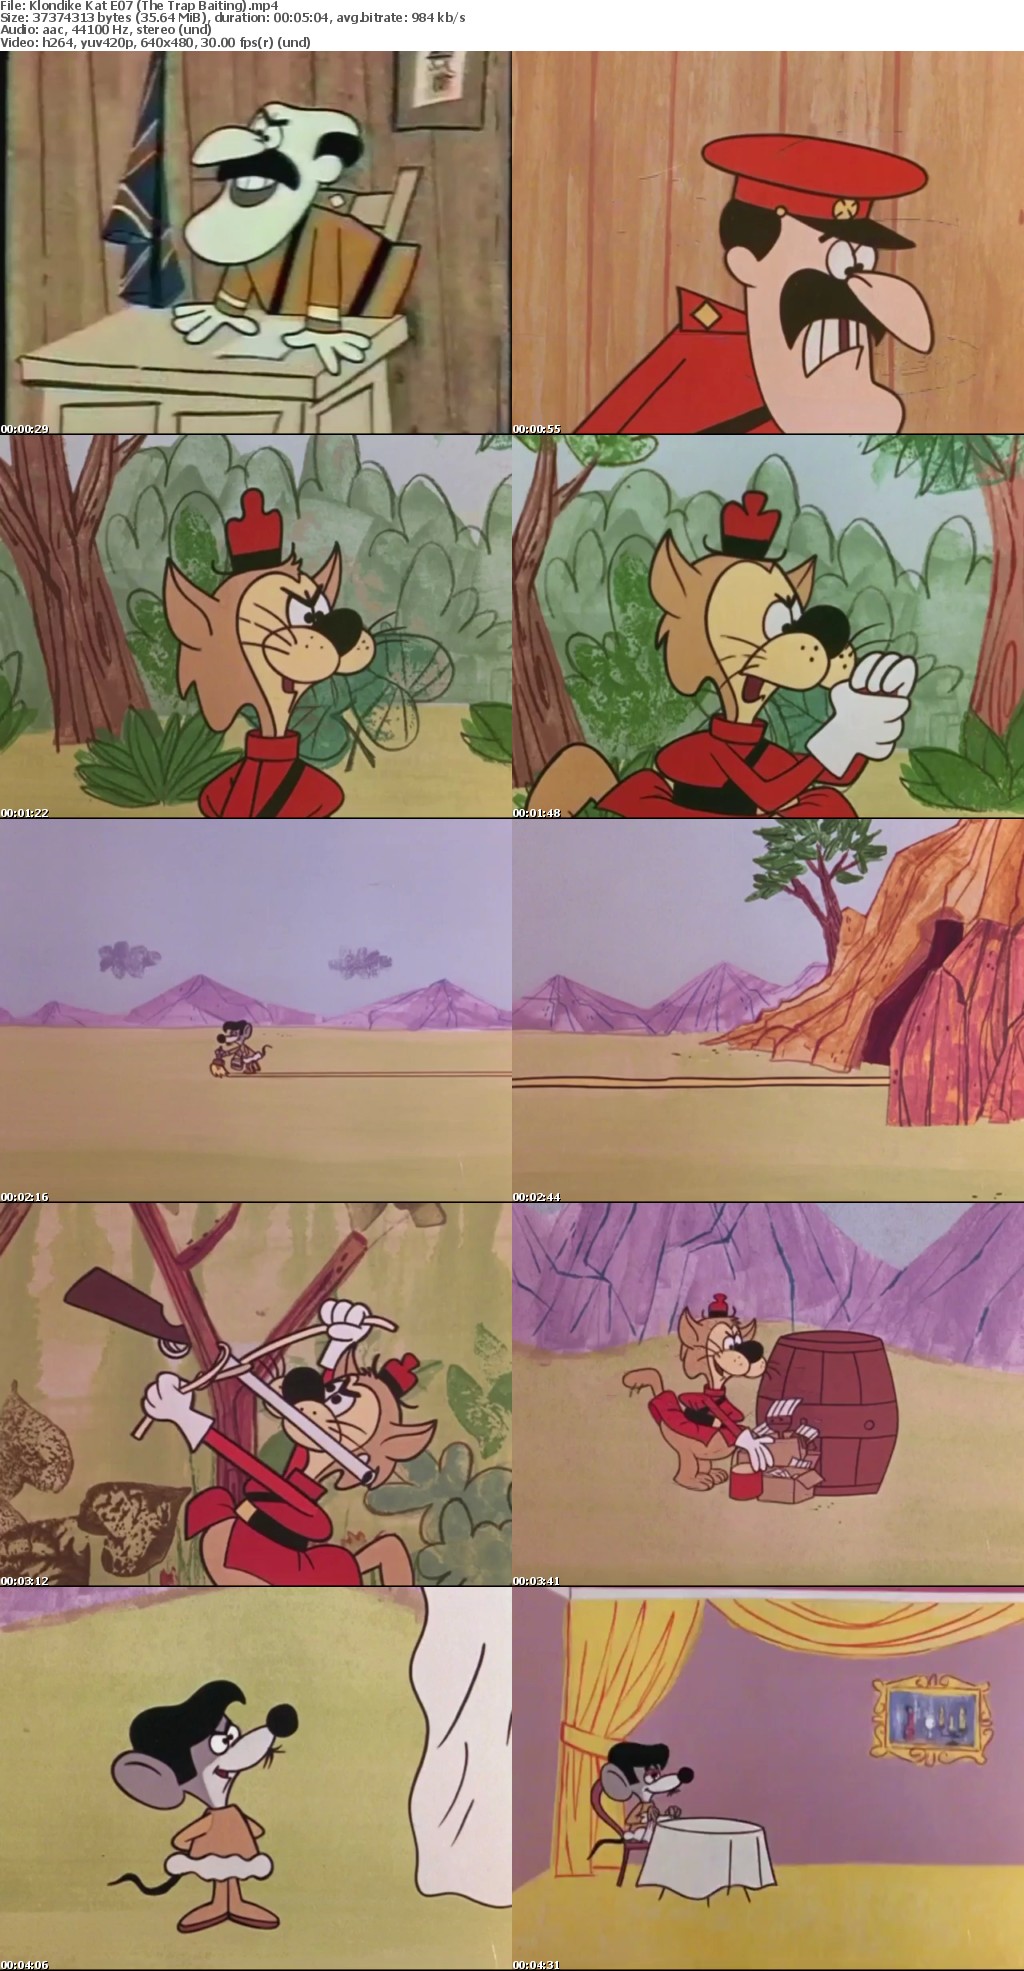 Klondike Kat (Cartoon series collection in MP4 format) lando18